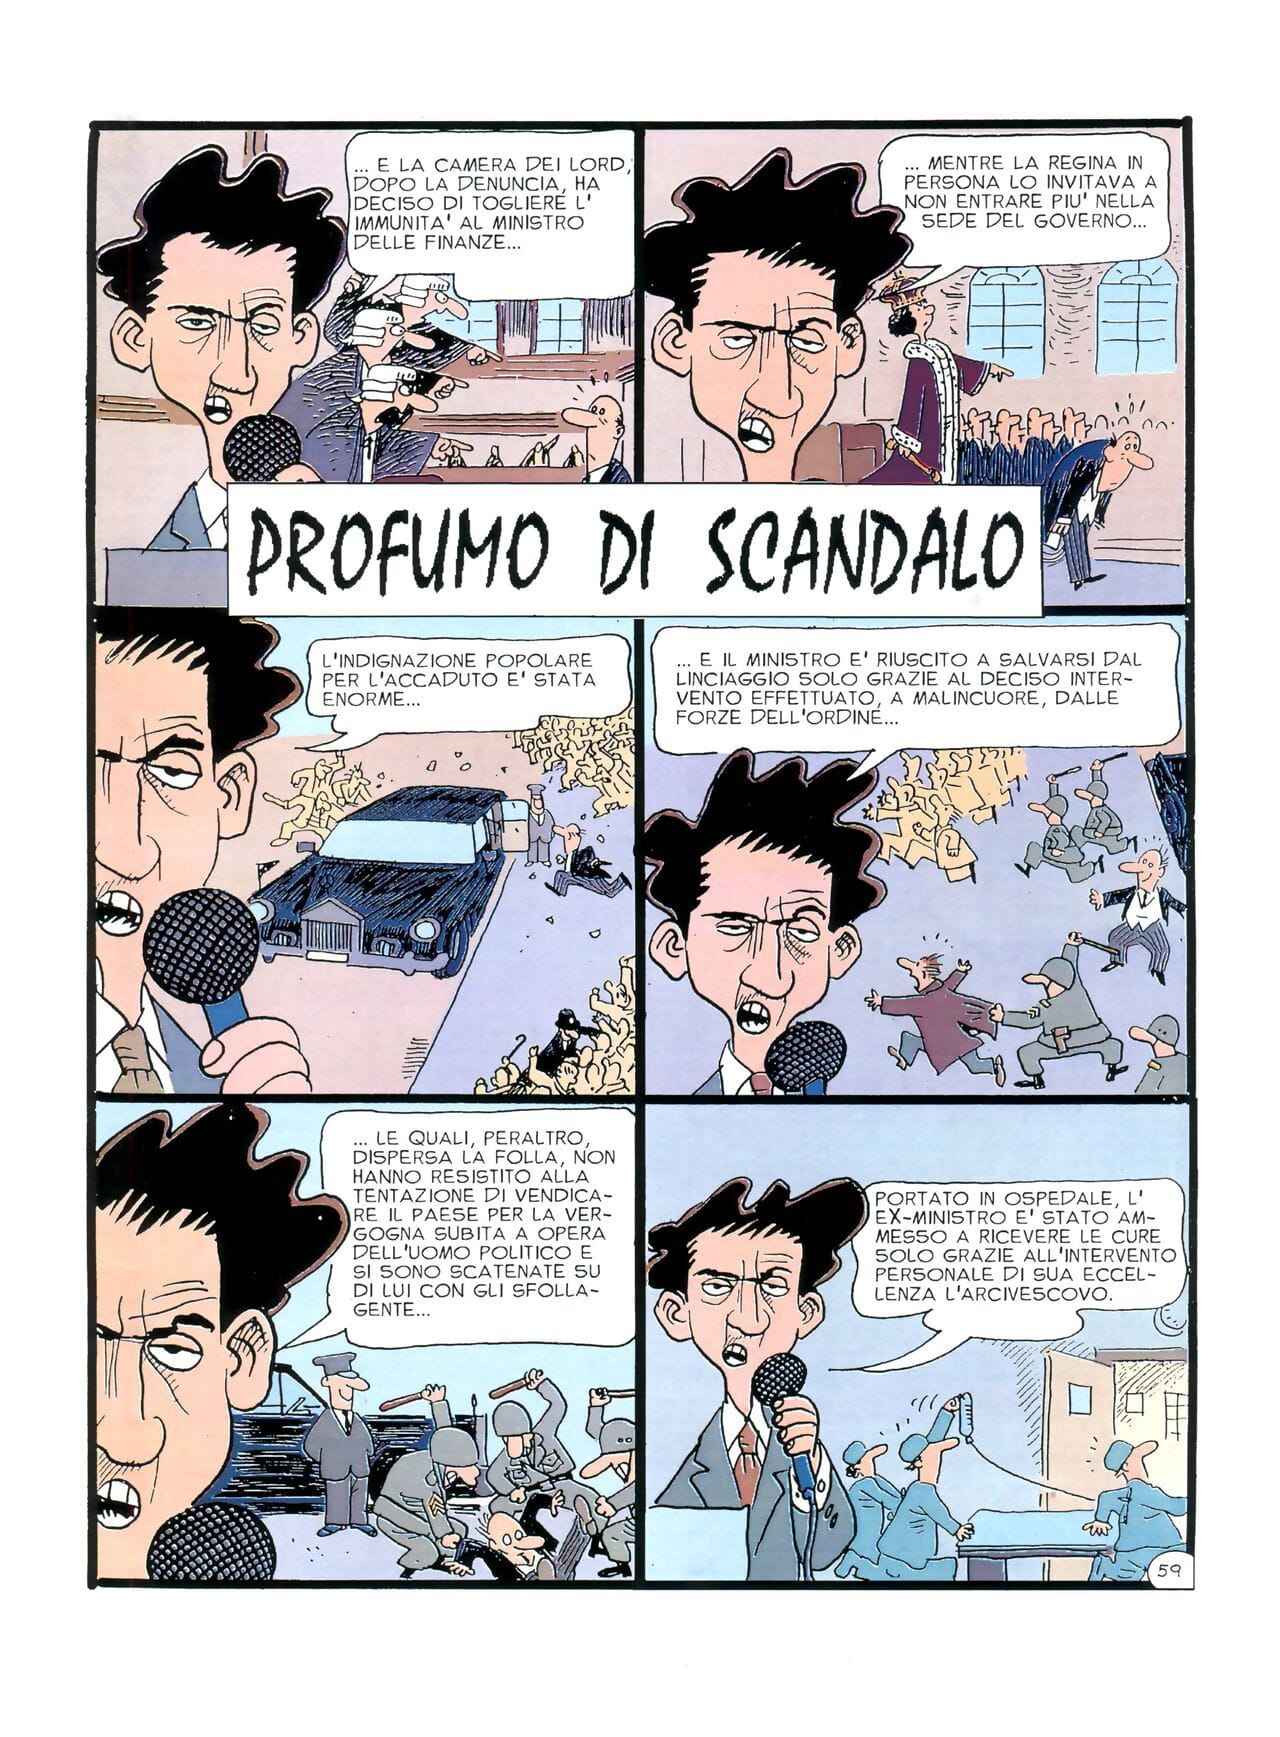 Chiara Di notte #1 PARTIE 3 page 1